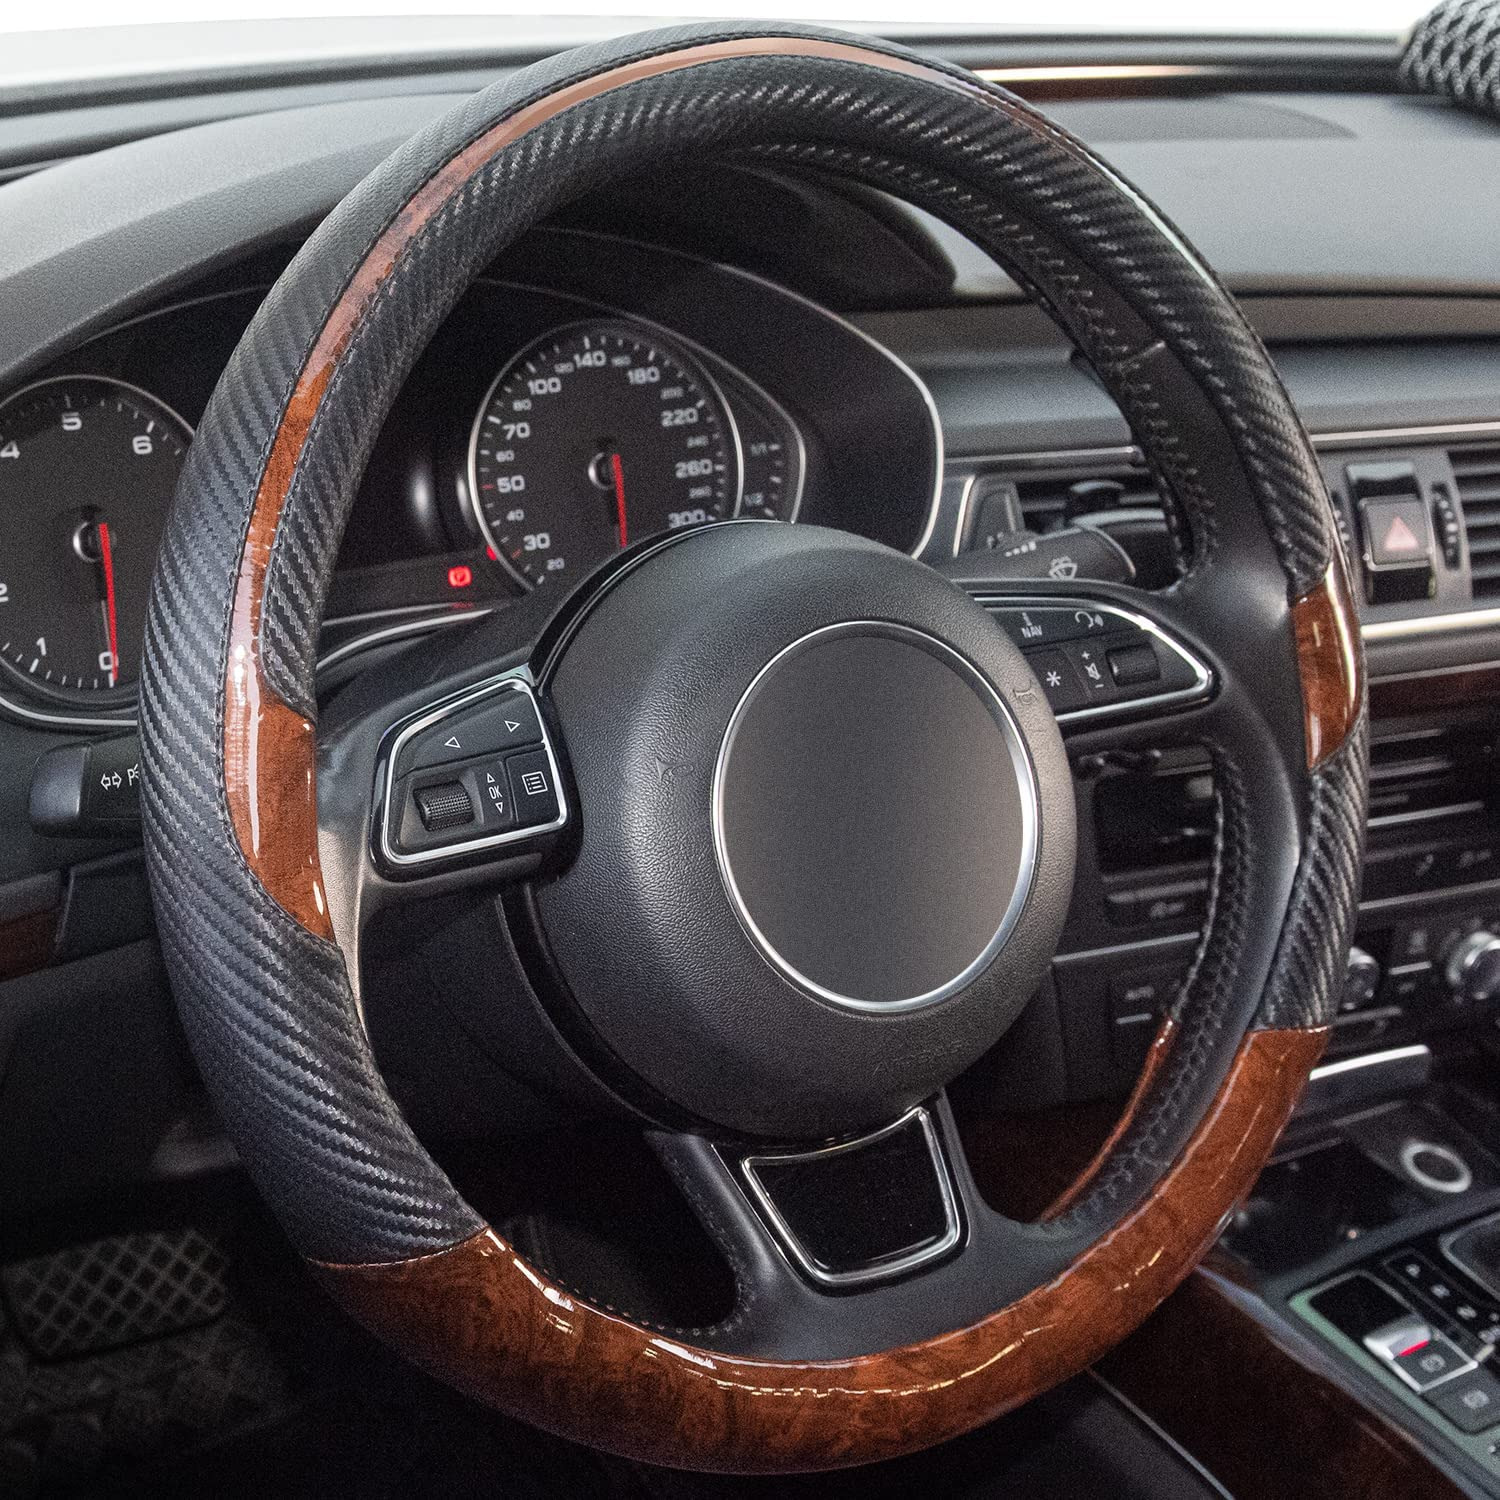 Wood Grain Steering Wheel Cover Black Universal Microfiber Leather, Suitable for